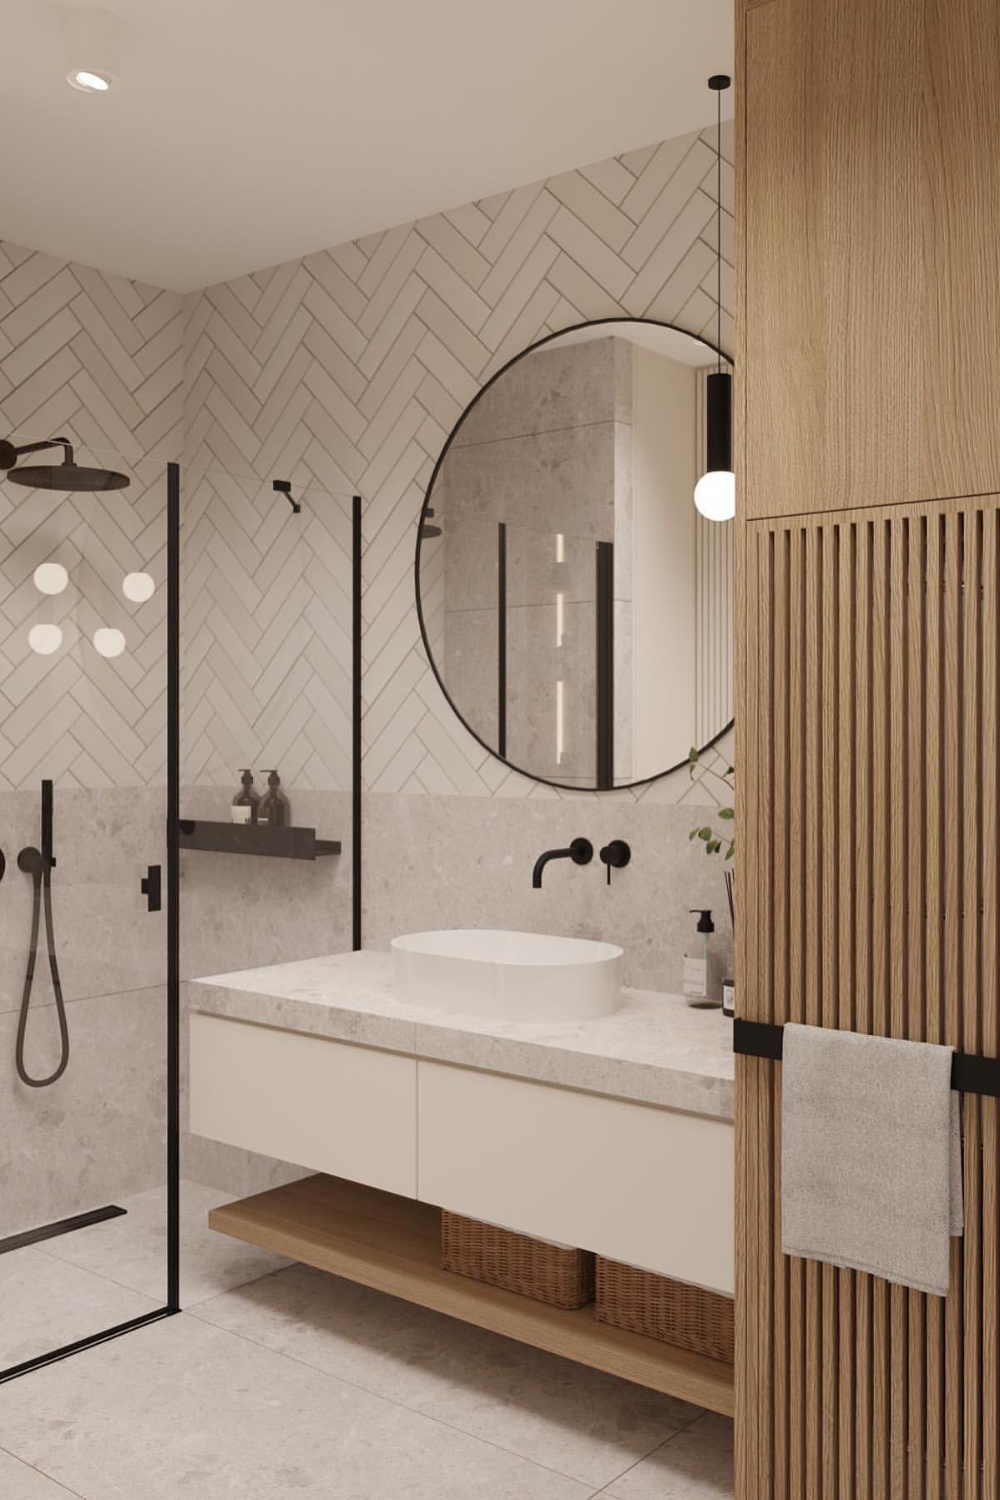 Bathroom Basins: Functional and Stylish Fixtures for Your Bathroom